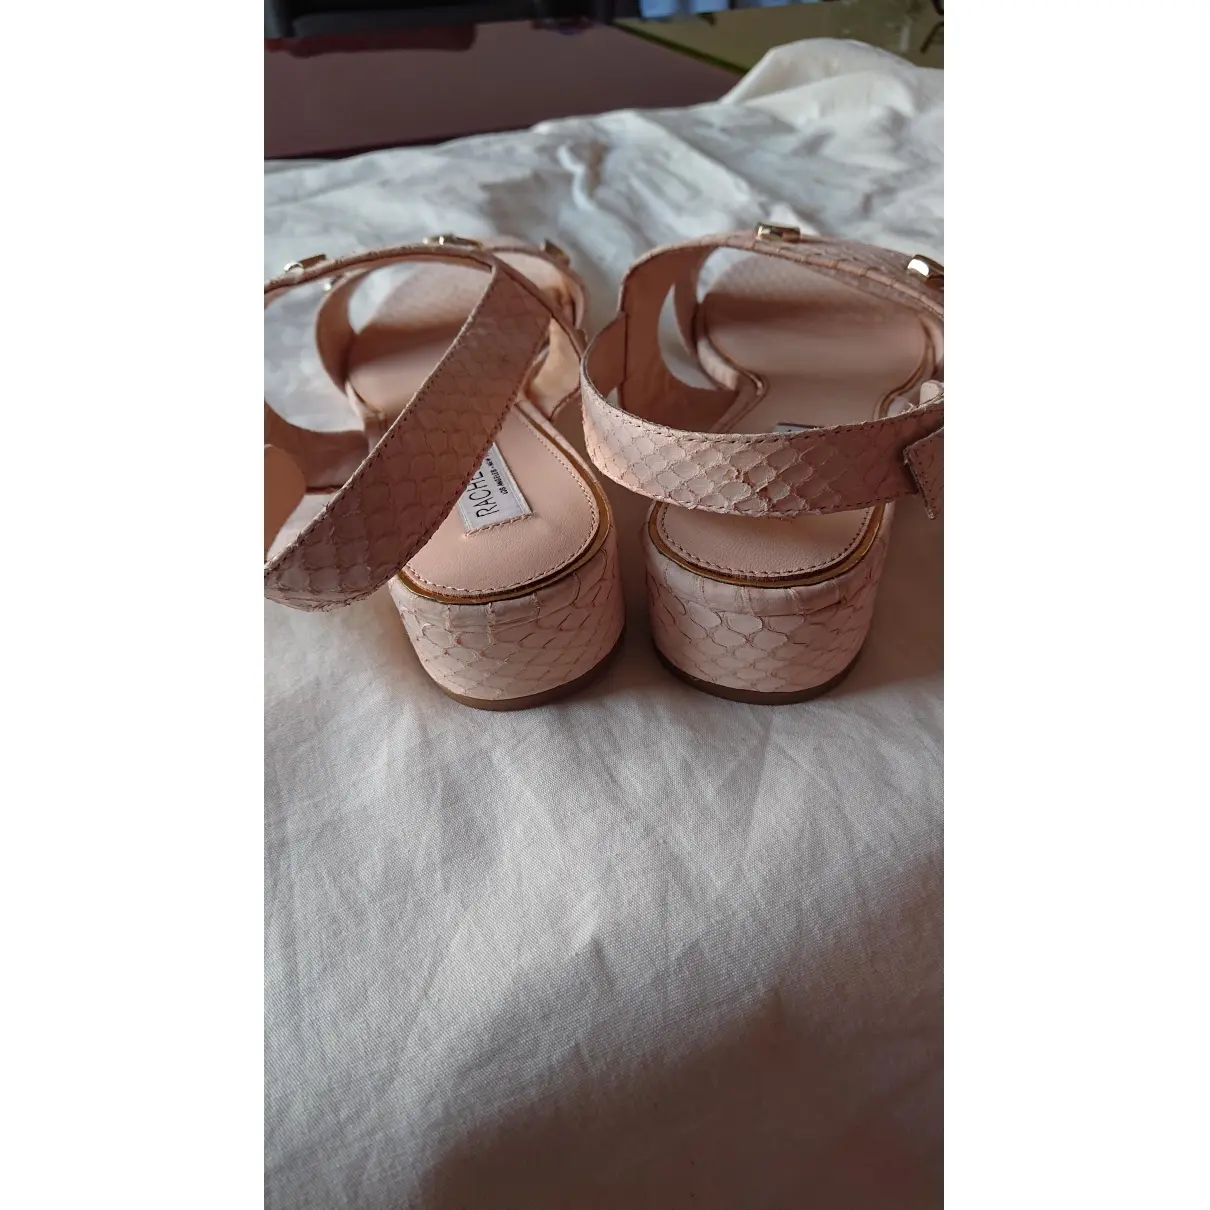 Buy Rachel Zoe Leather sandal online